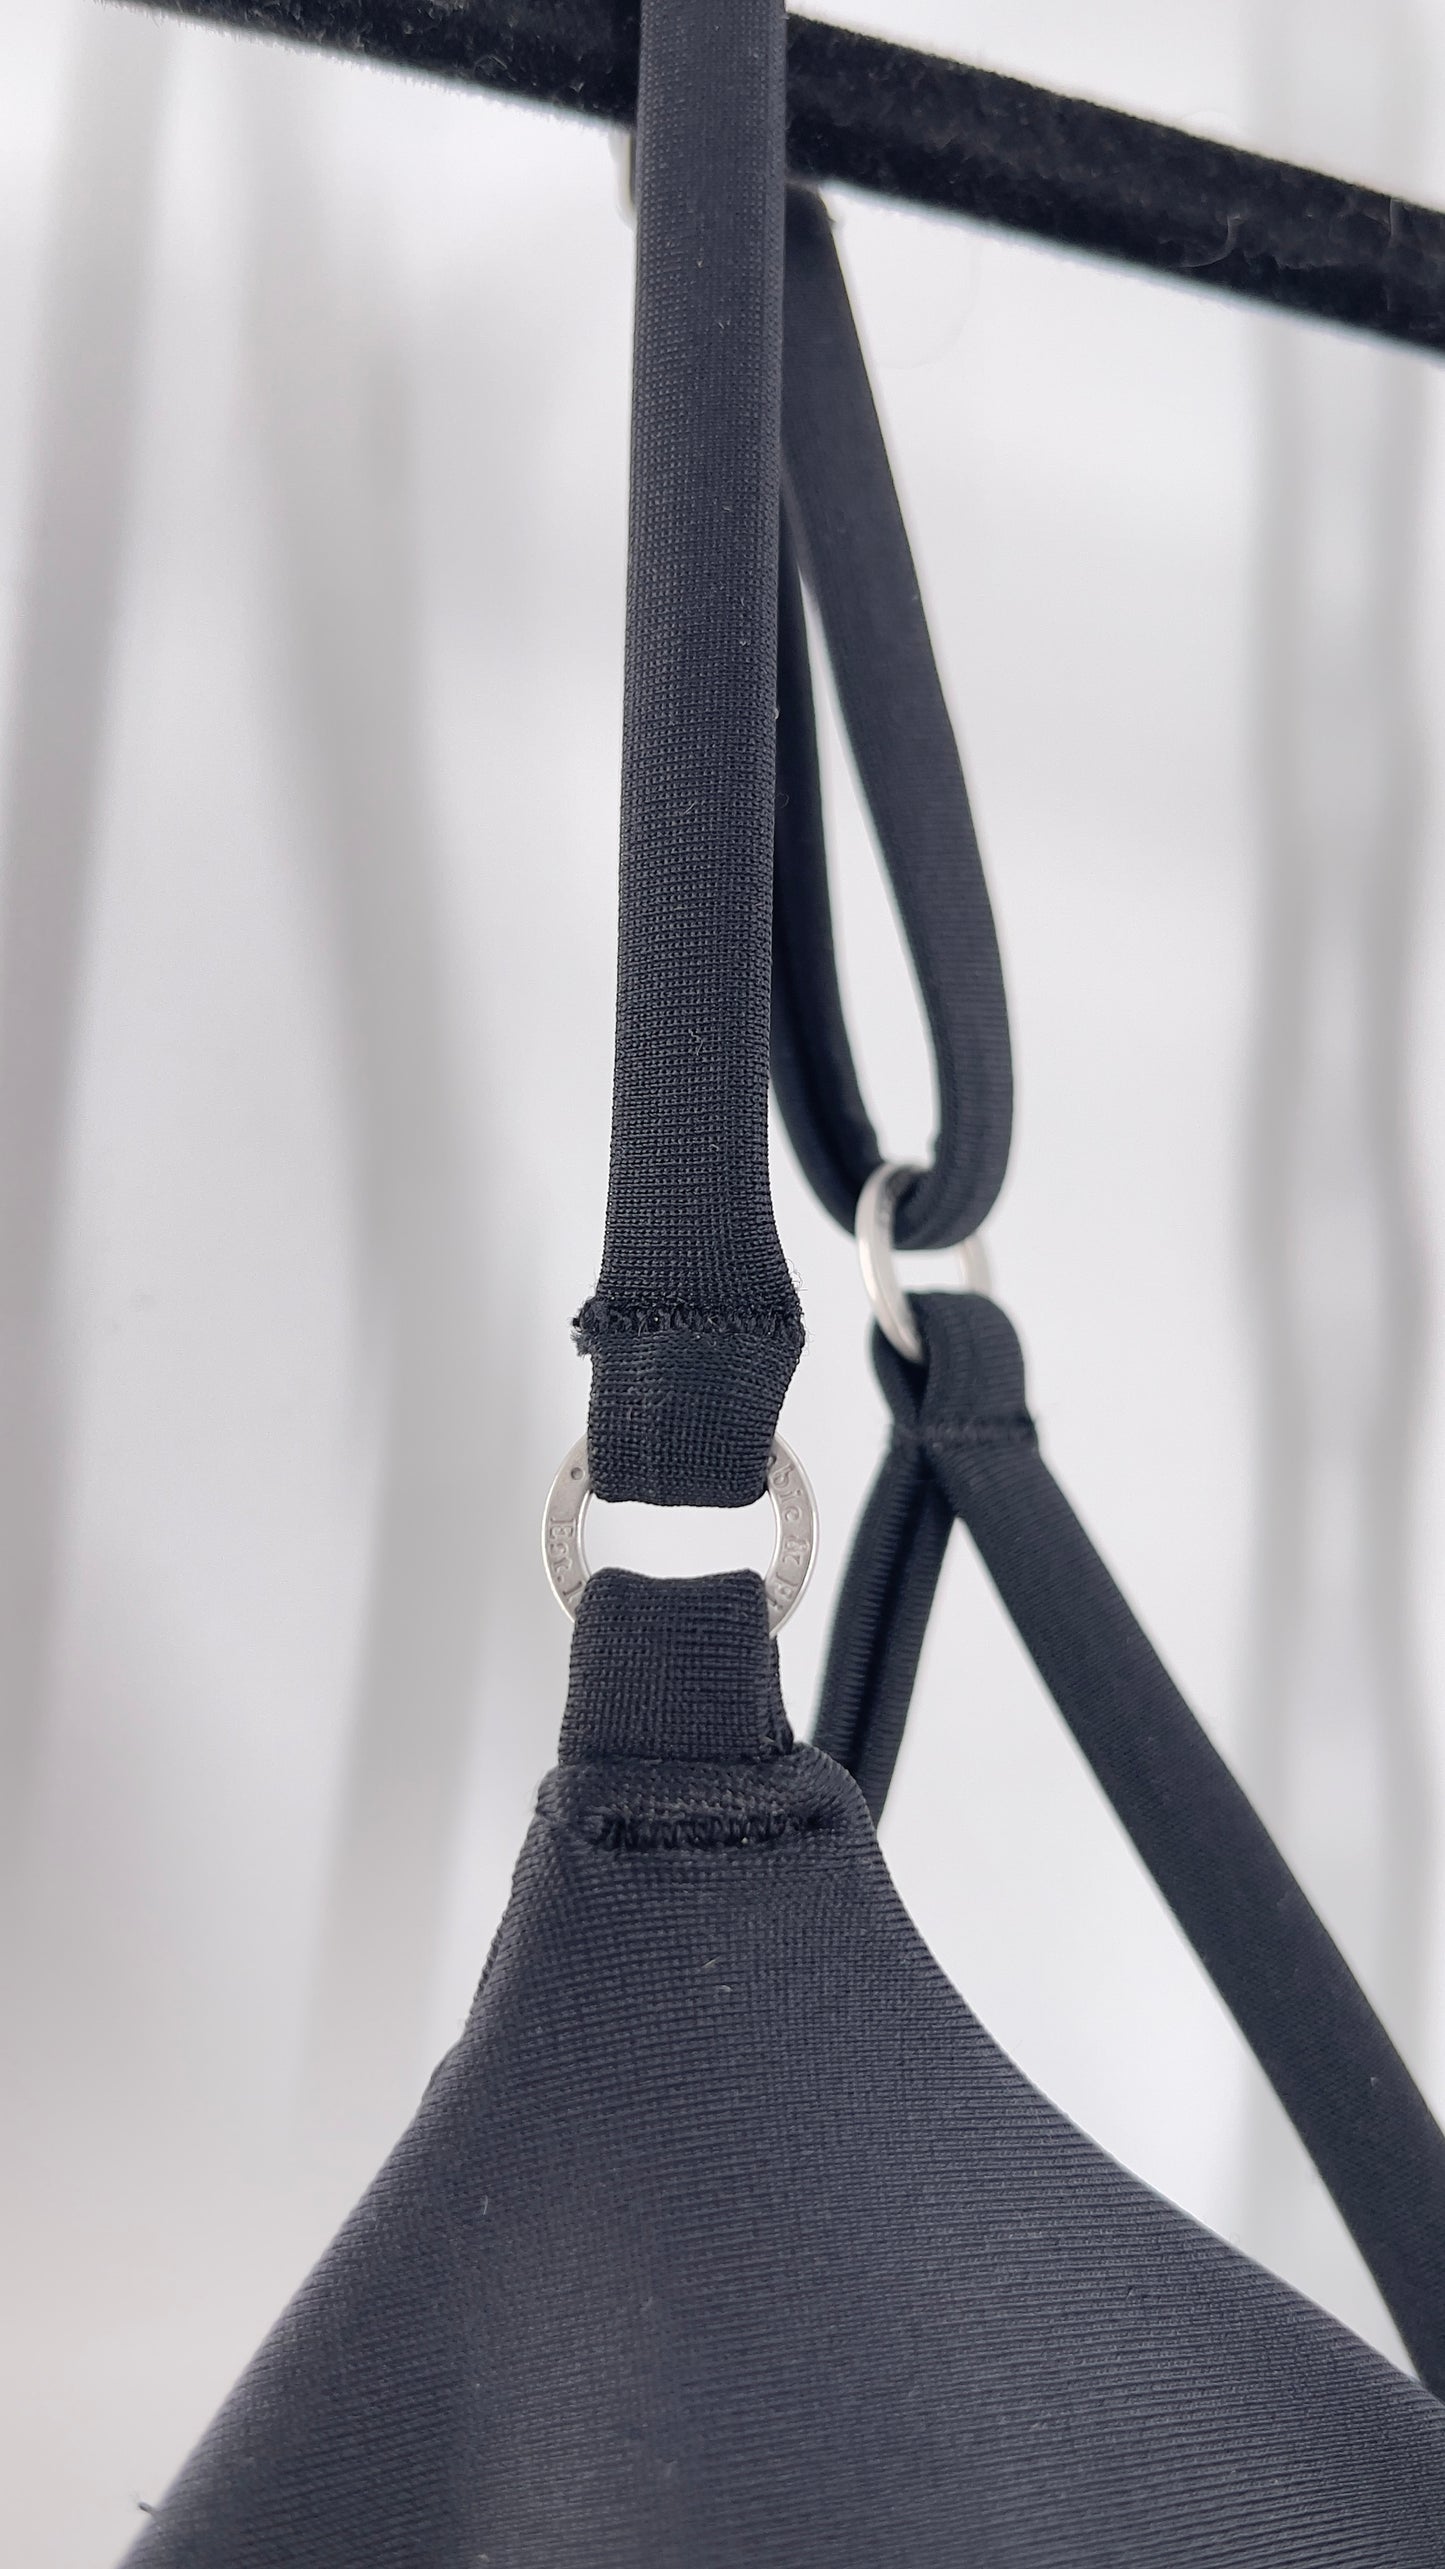 Abercrombie & Fitch Black Padded Triangle Swim Top (Medium)